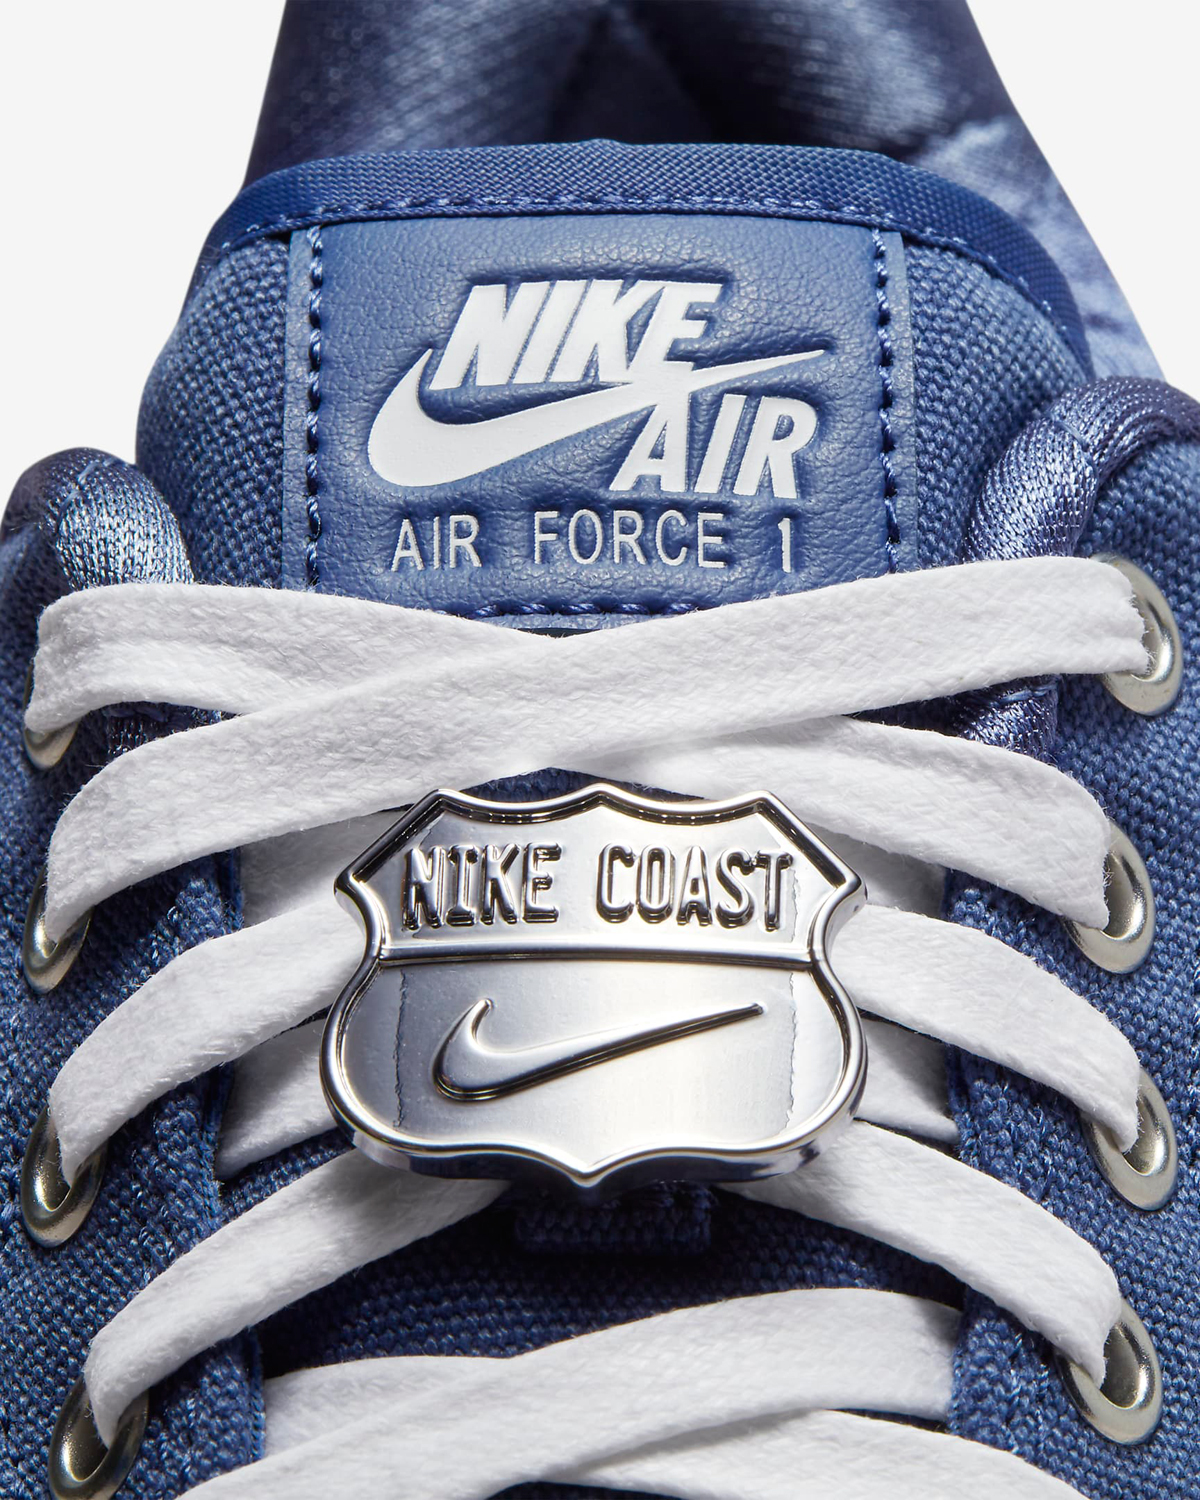 Nike-Air-Force-1-Low-West-Coast-Los-Angeles-Release-Date-9